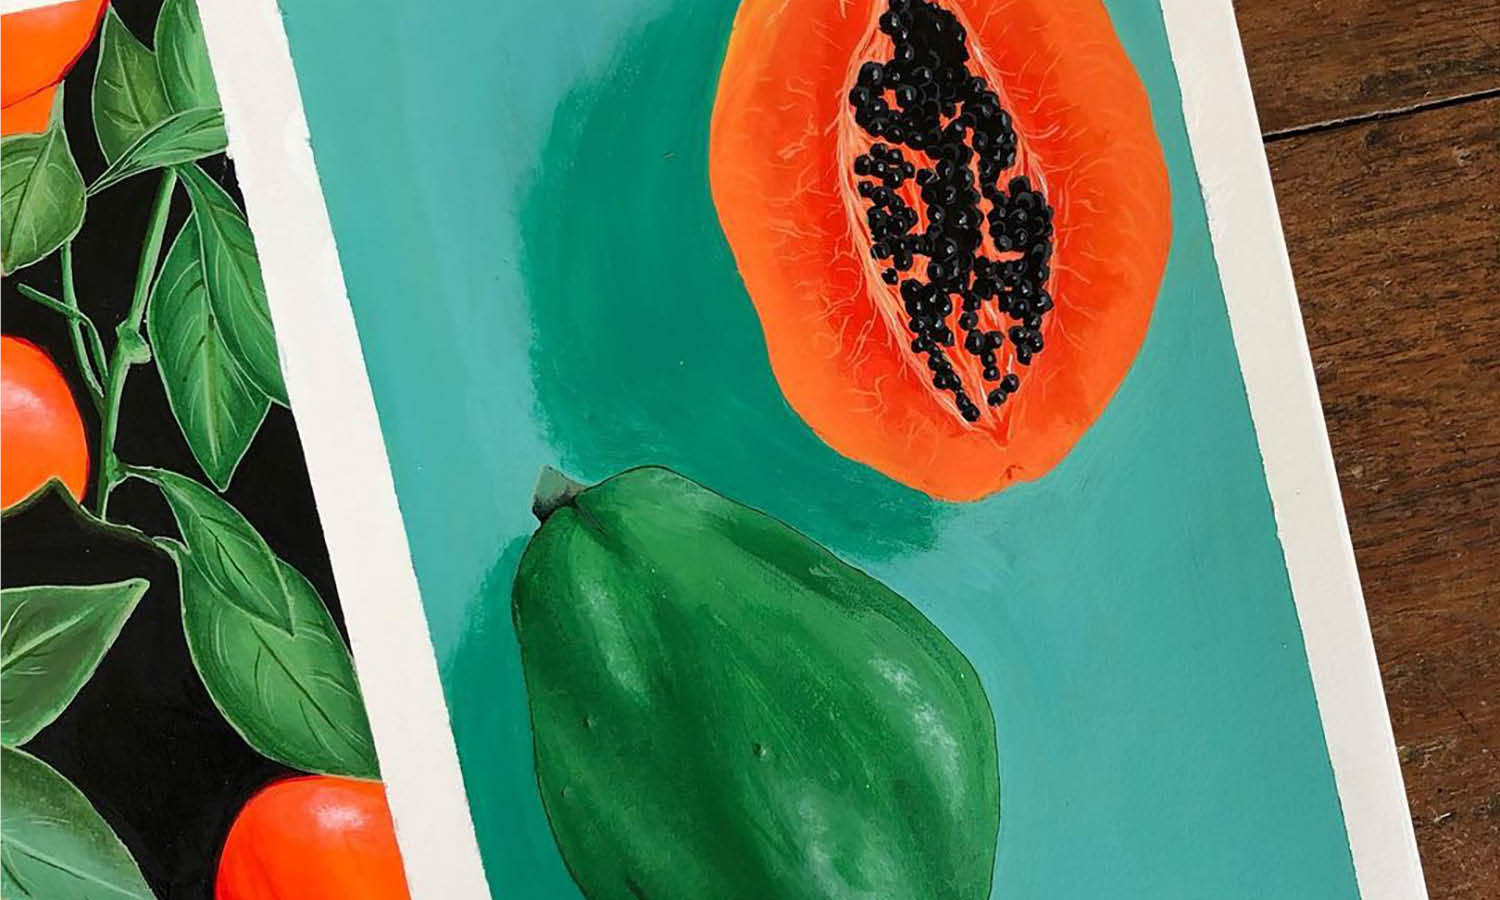 30 Best Tropical Fruit Illustration Ideas You Should Check